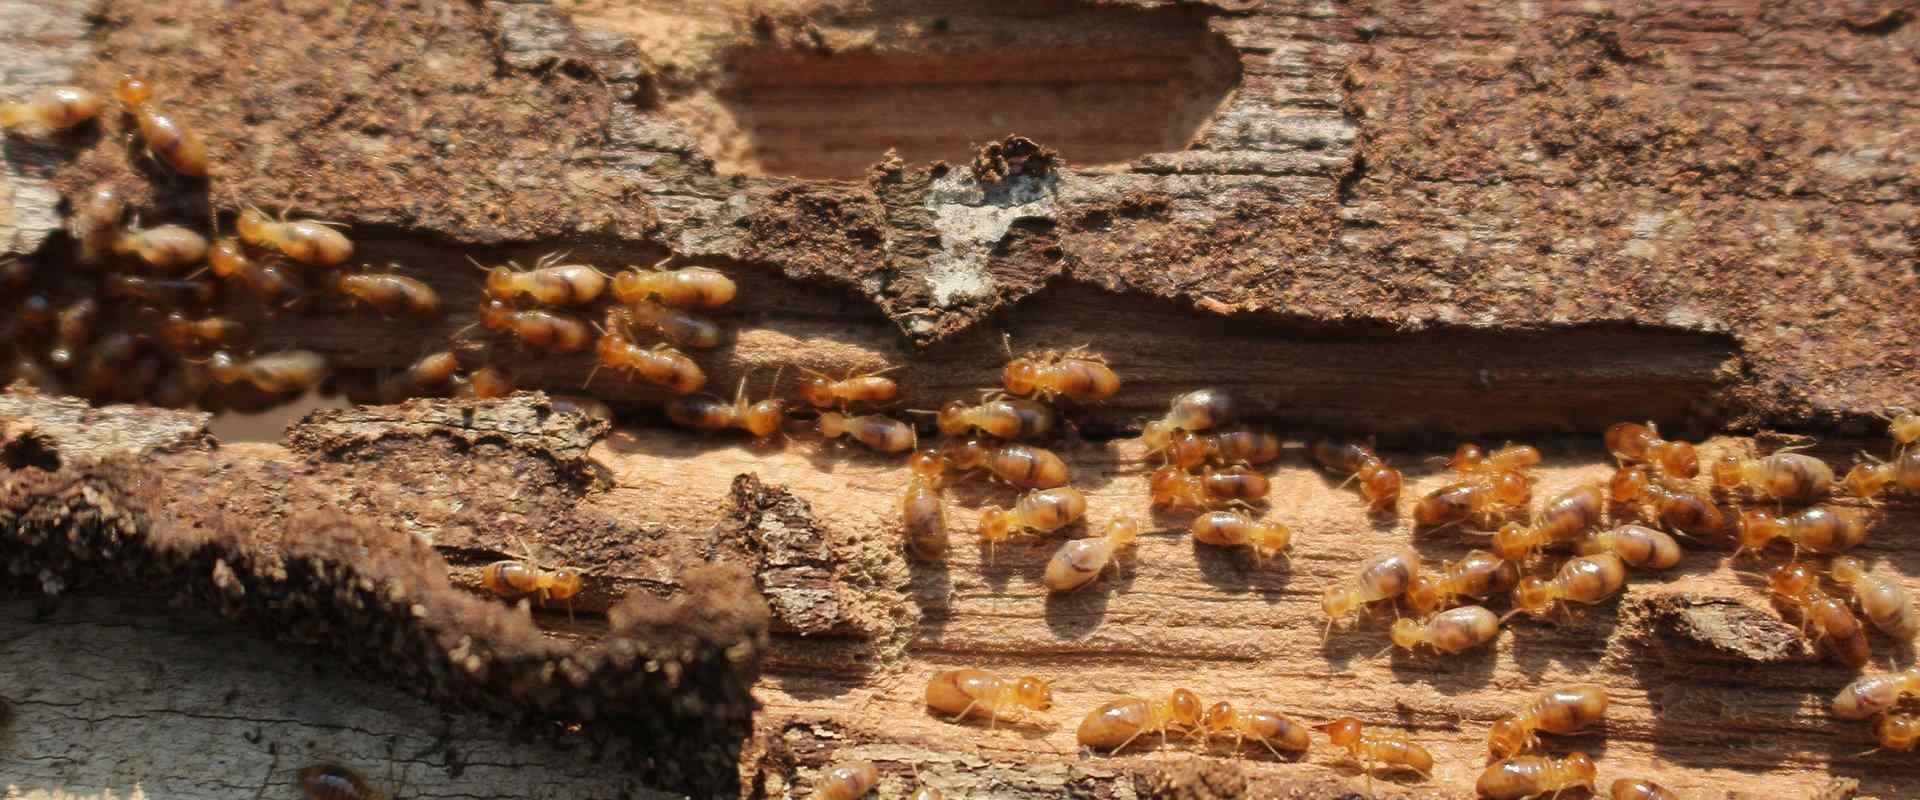 termites eating at wood